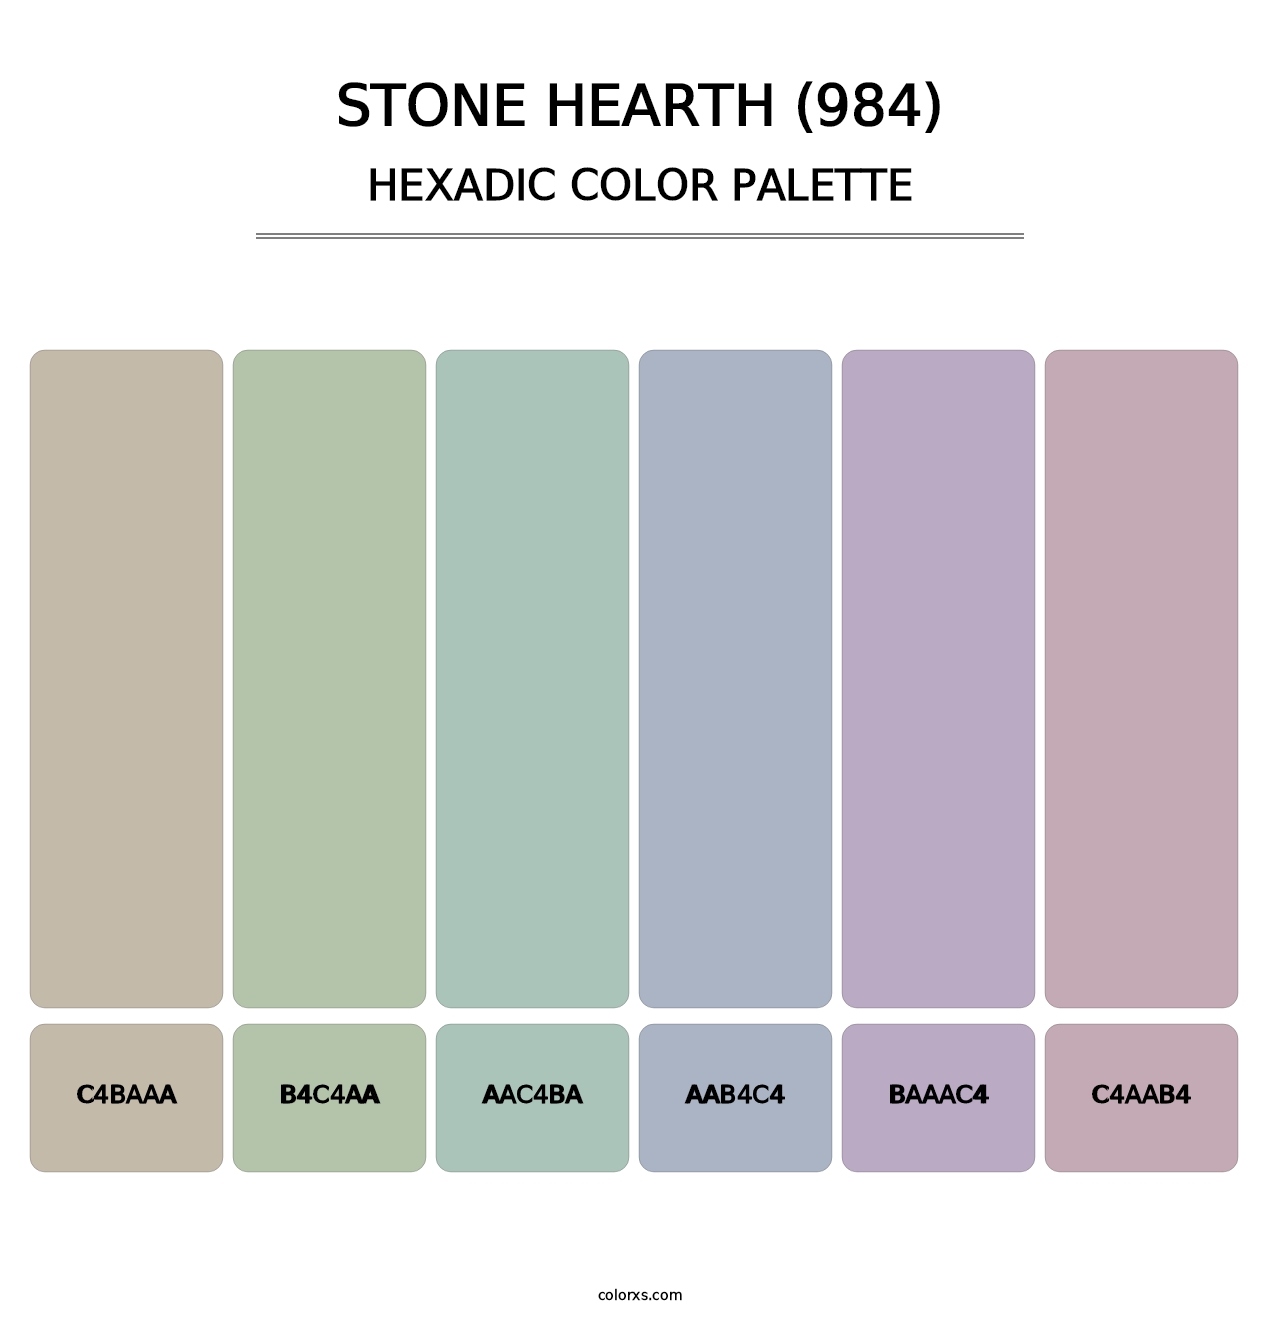 Stone Hearth (984) - Hexadic Color Palette